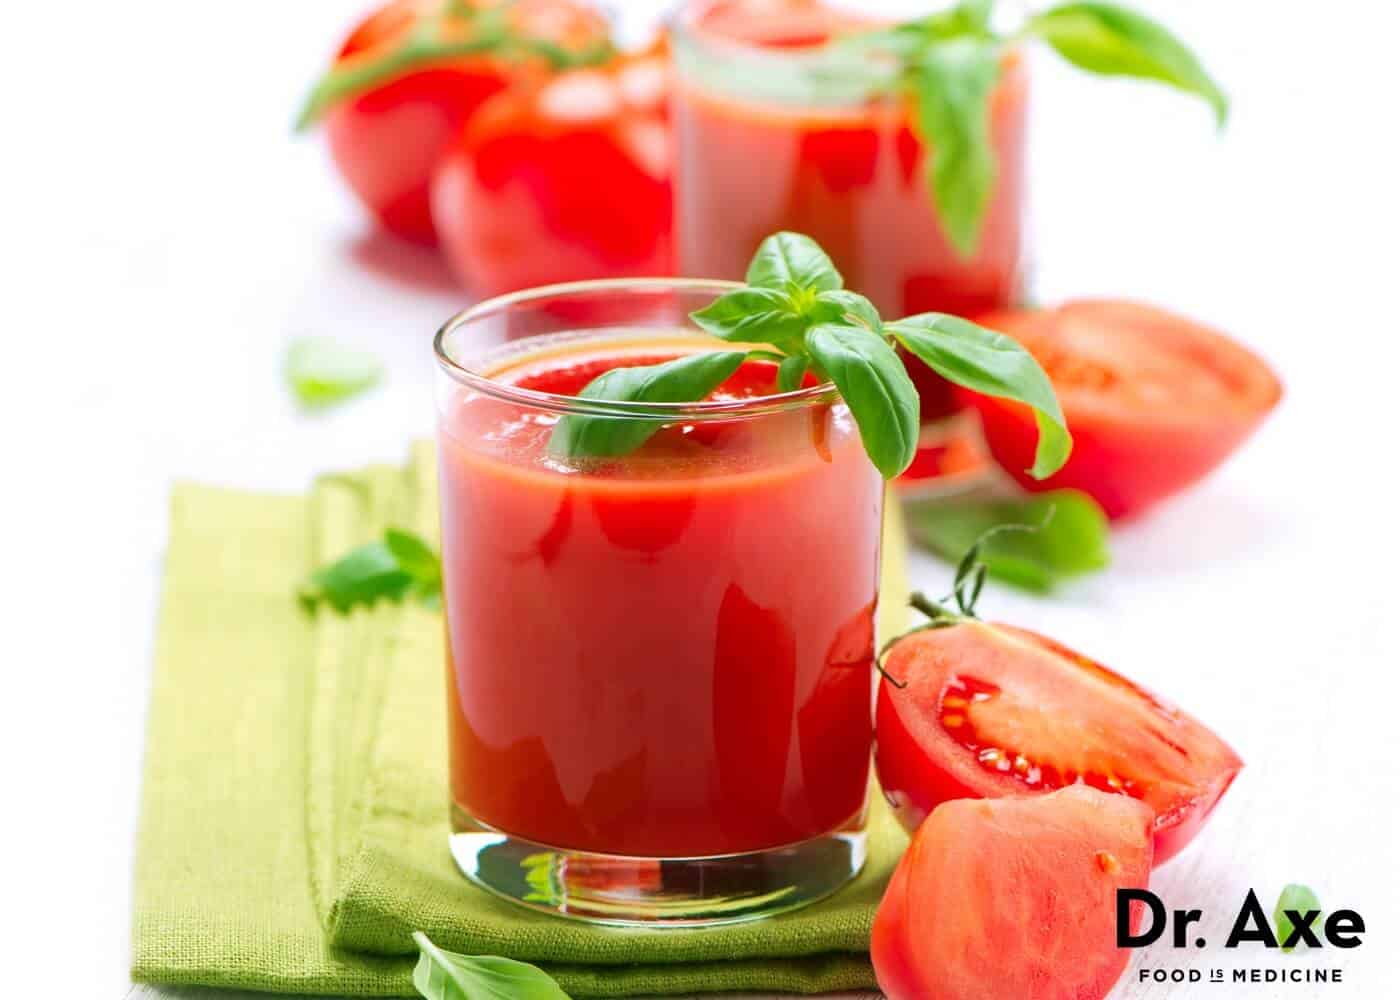 Tomato basil juice recipe - Dr. Axe